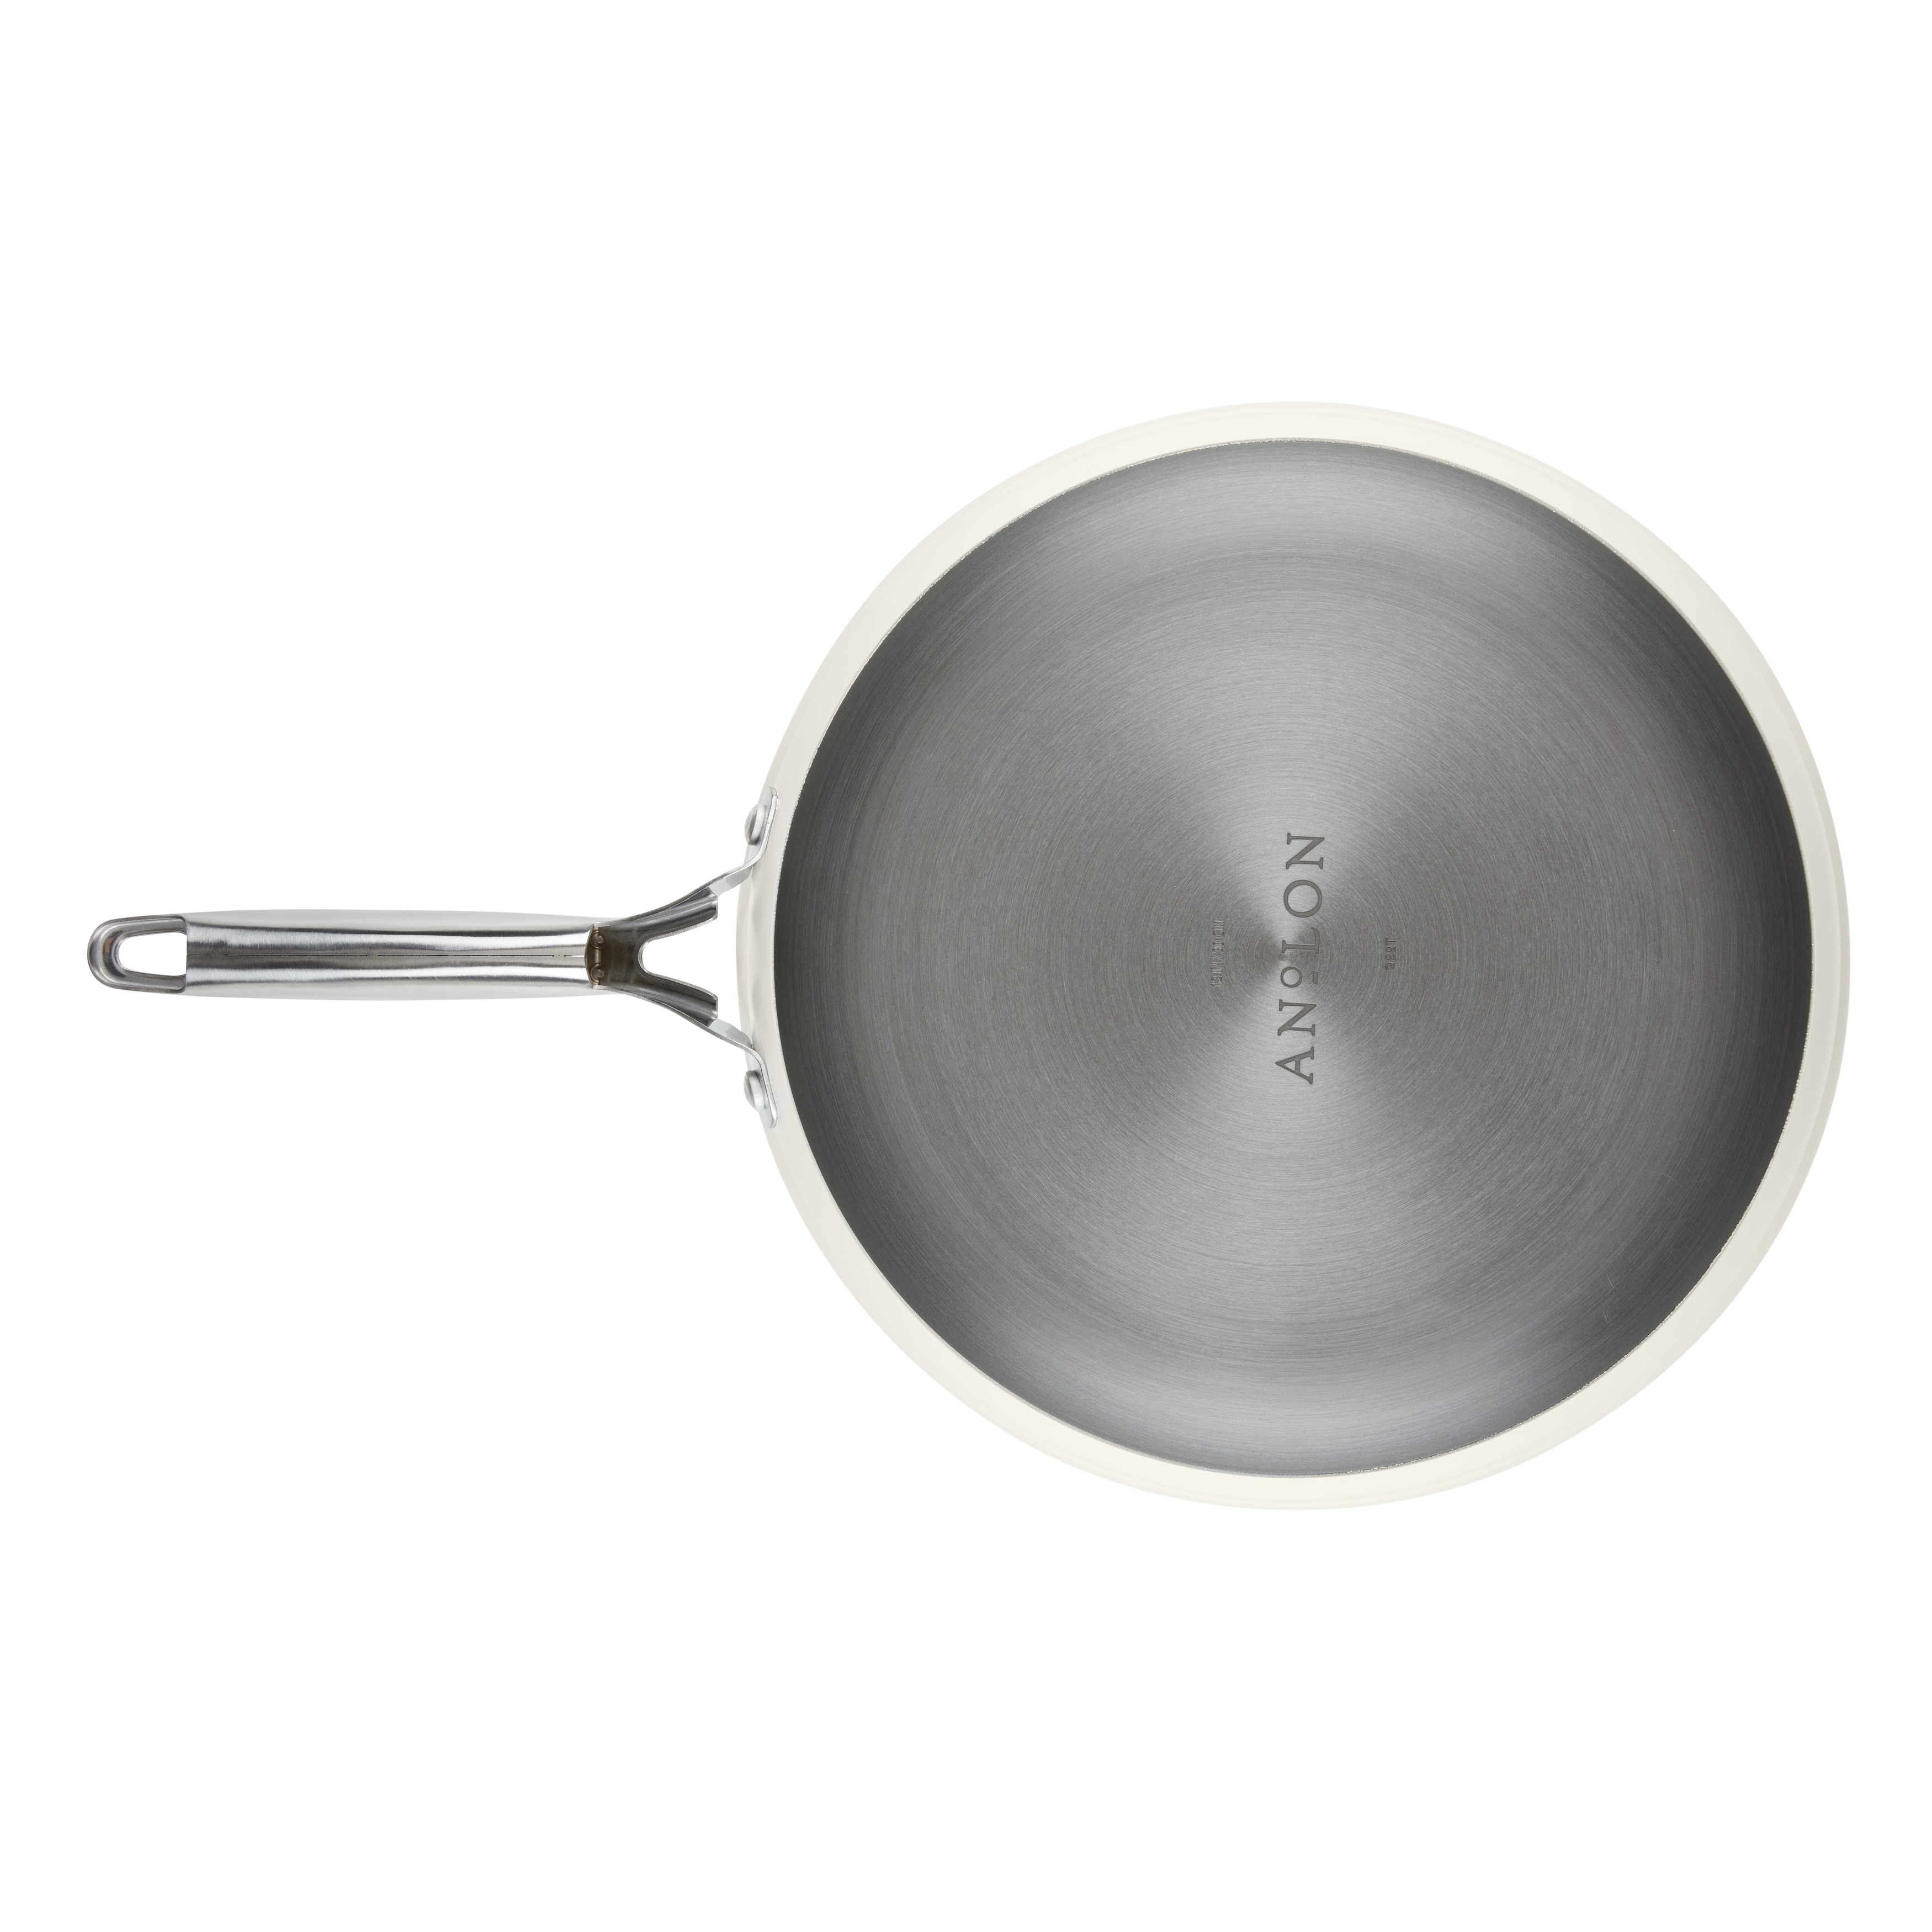 Anolon X Hybrid Nonstick Frying Pan/Skillet with Helper Handle, 12 Inch,  Dark Gray